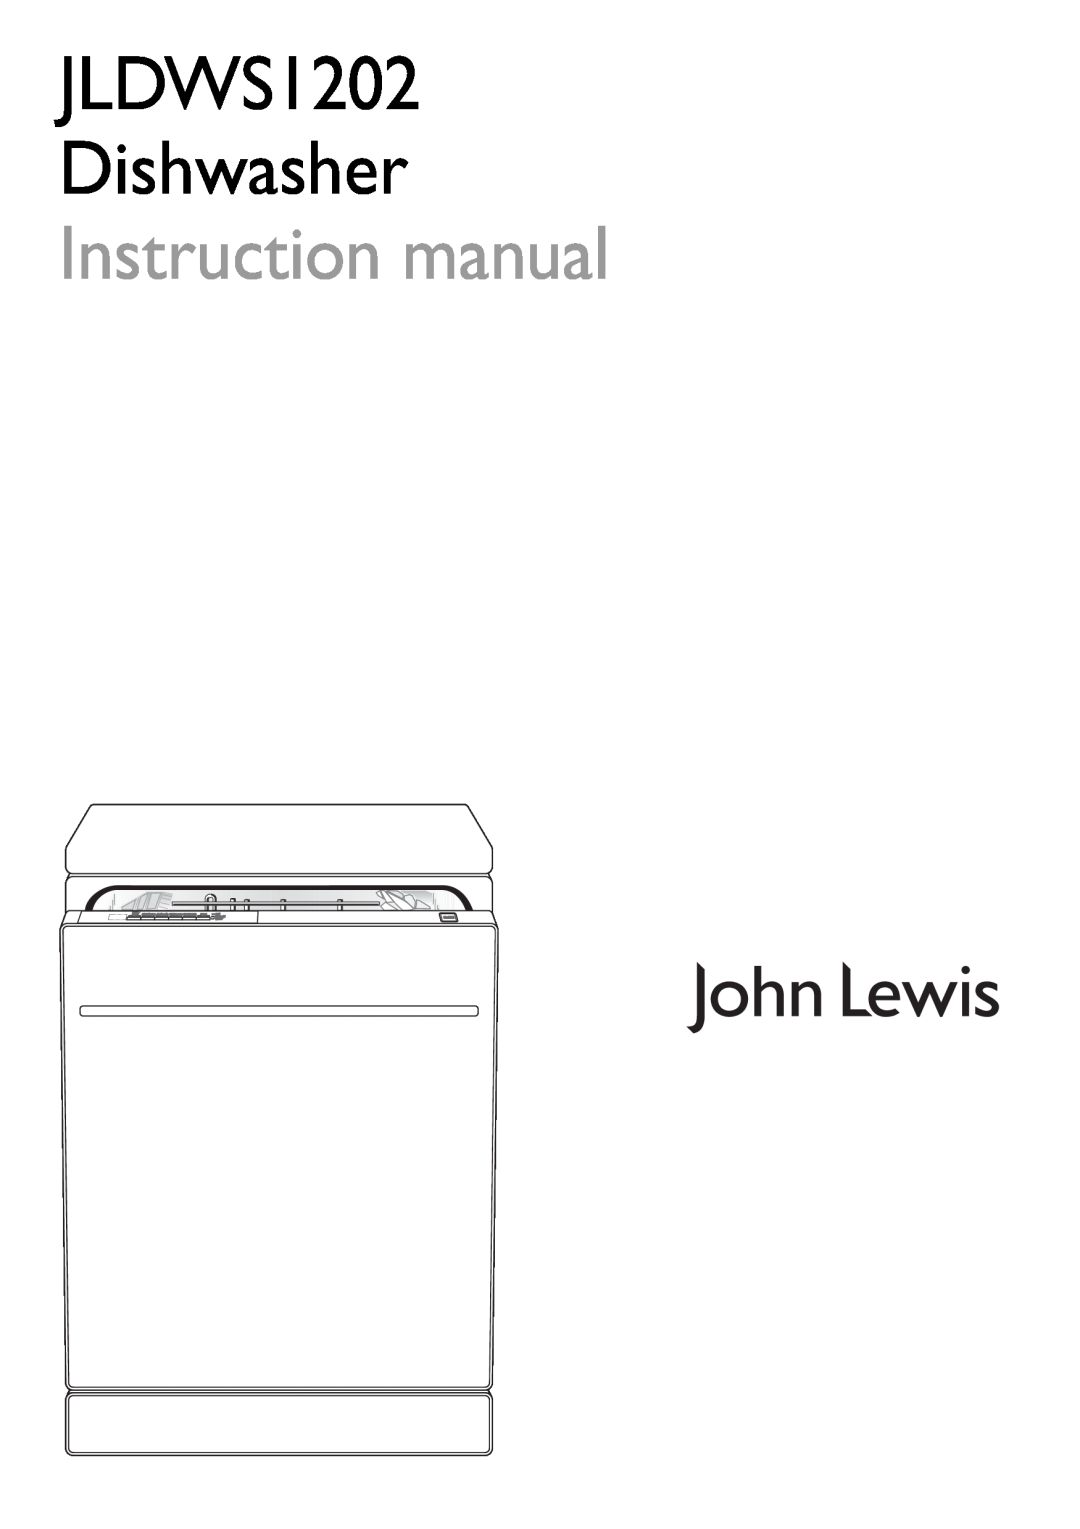 John Lewis JLDWS1202 instruction manual Dishwasher Instruction manual 